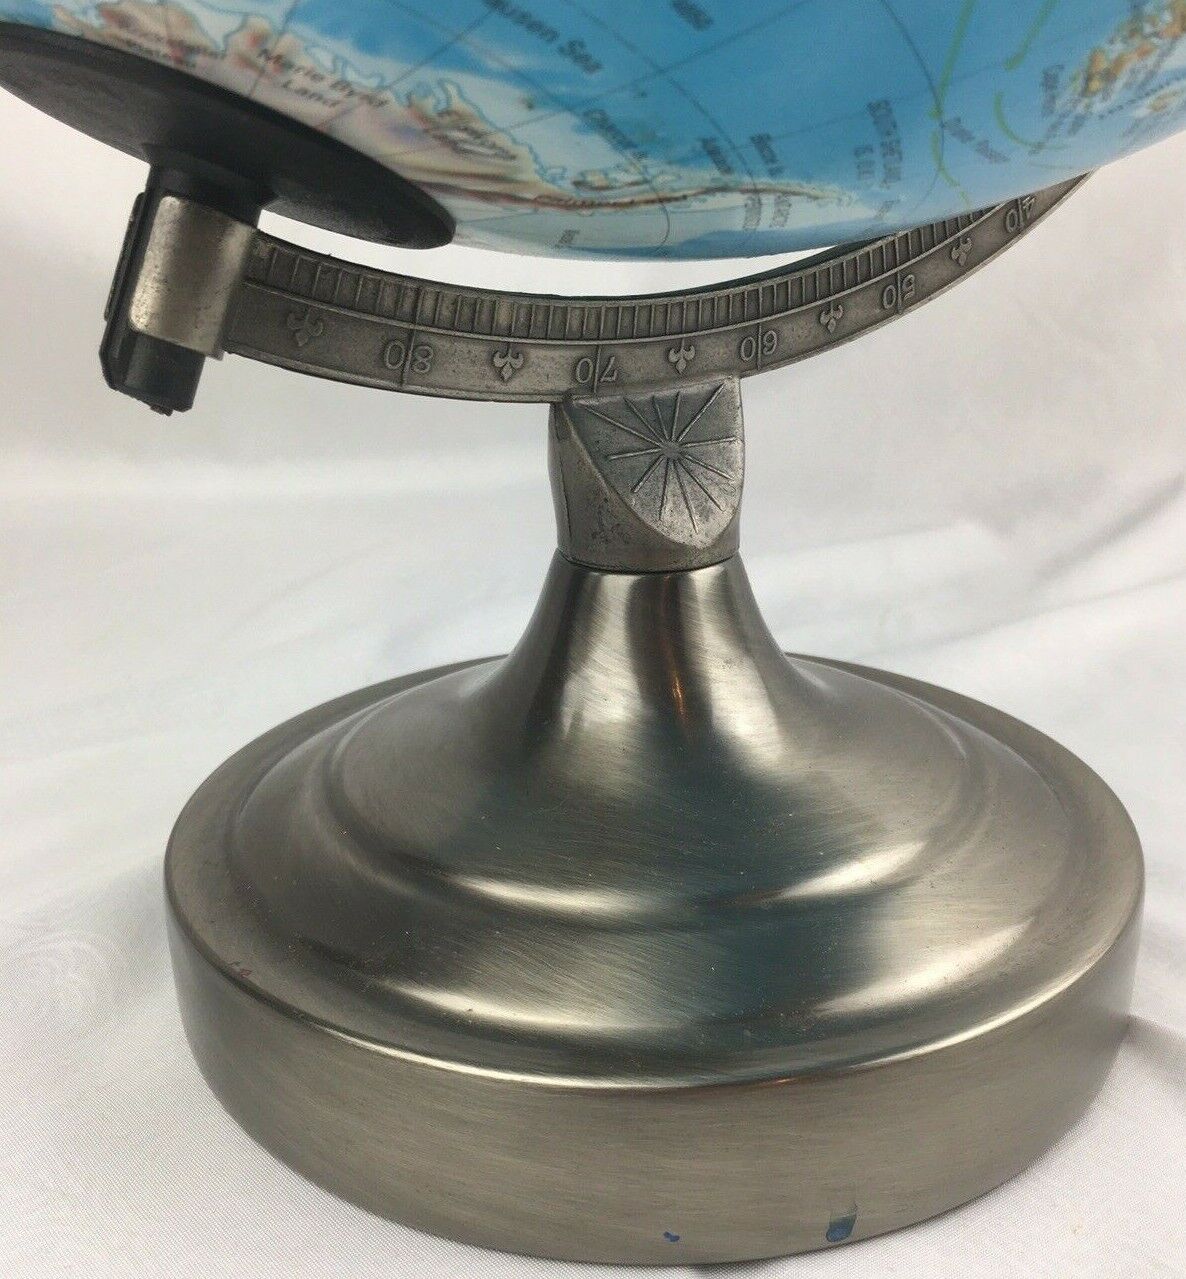 Lot of 2 Replogle World Globes - 10" Vintage 1950's and used 30cm - Art Decor Без бренда - фотография #10